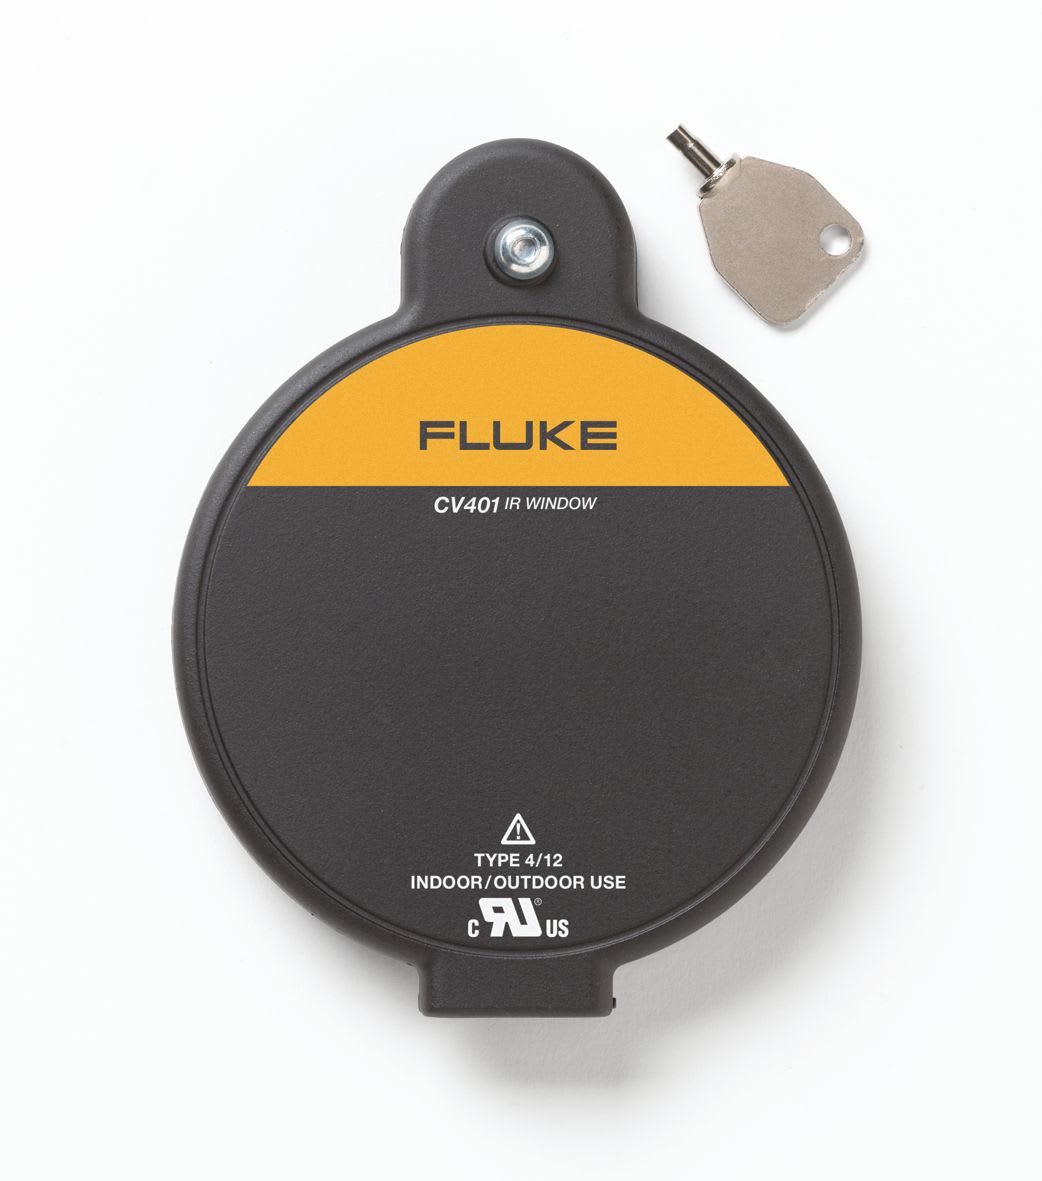 Fluke - FLUKE-CV401 HubLot infrarouge 100 mm, loquet a cle de securite